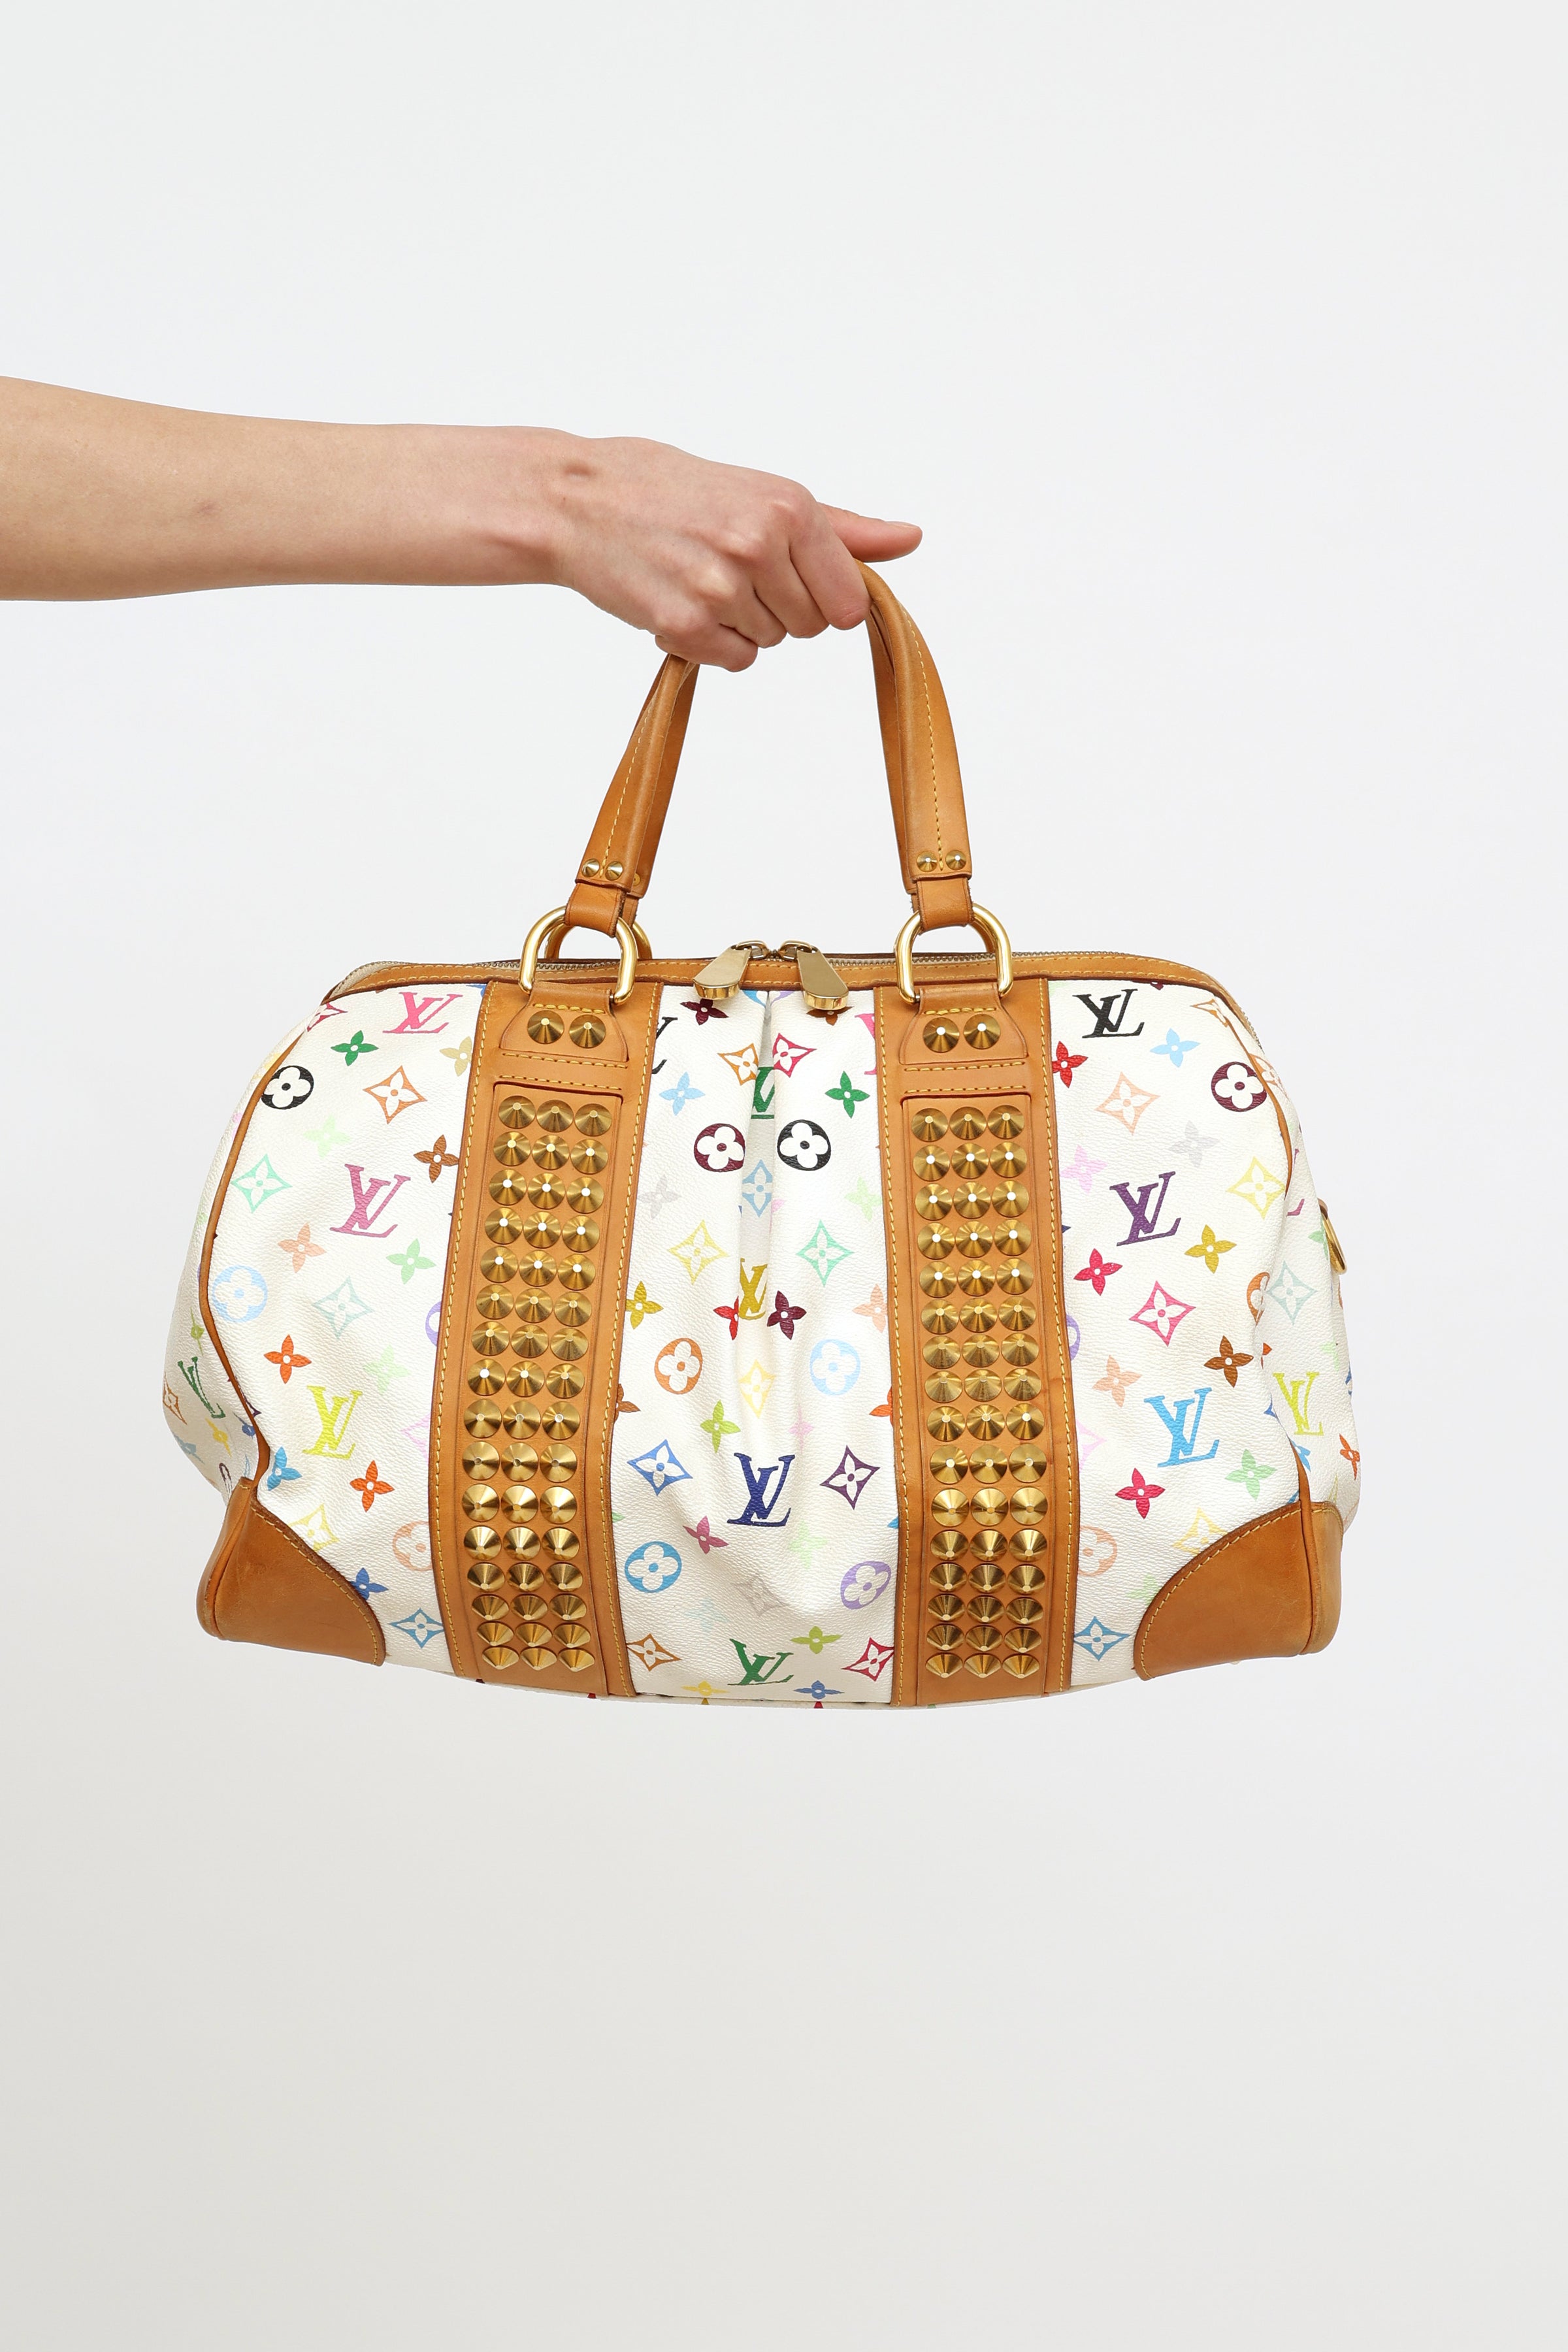 Color Me Courtney - Takashi Murakami Louis Vuitton Mini Bag